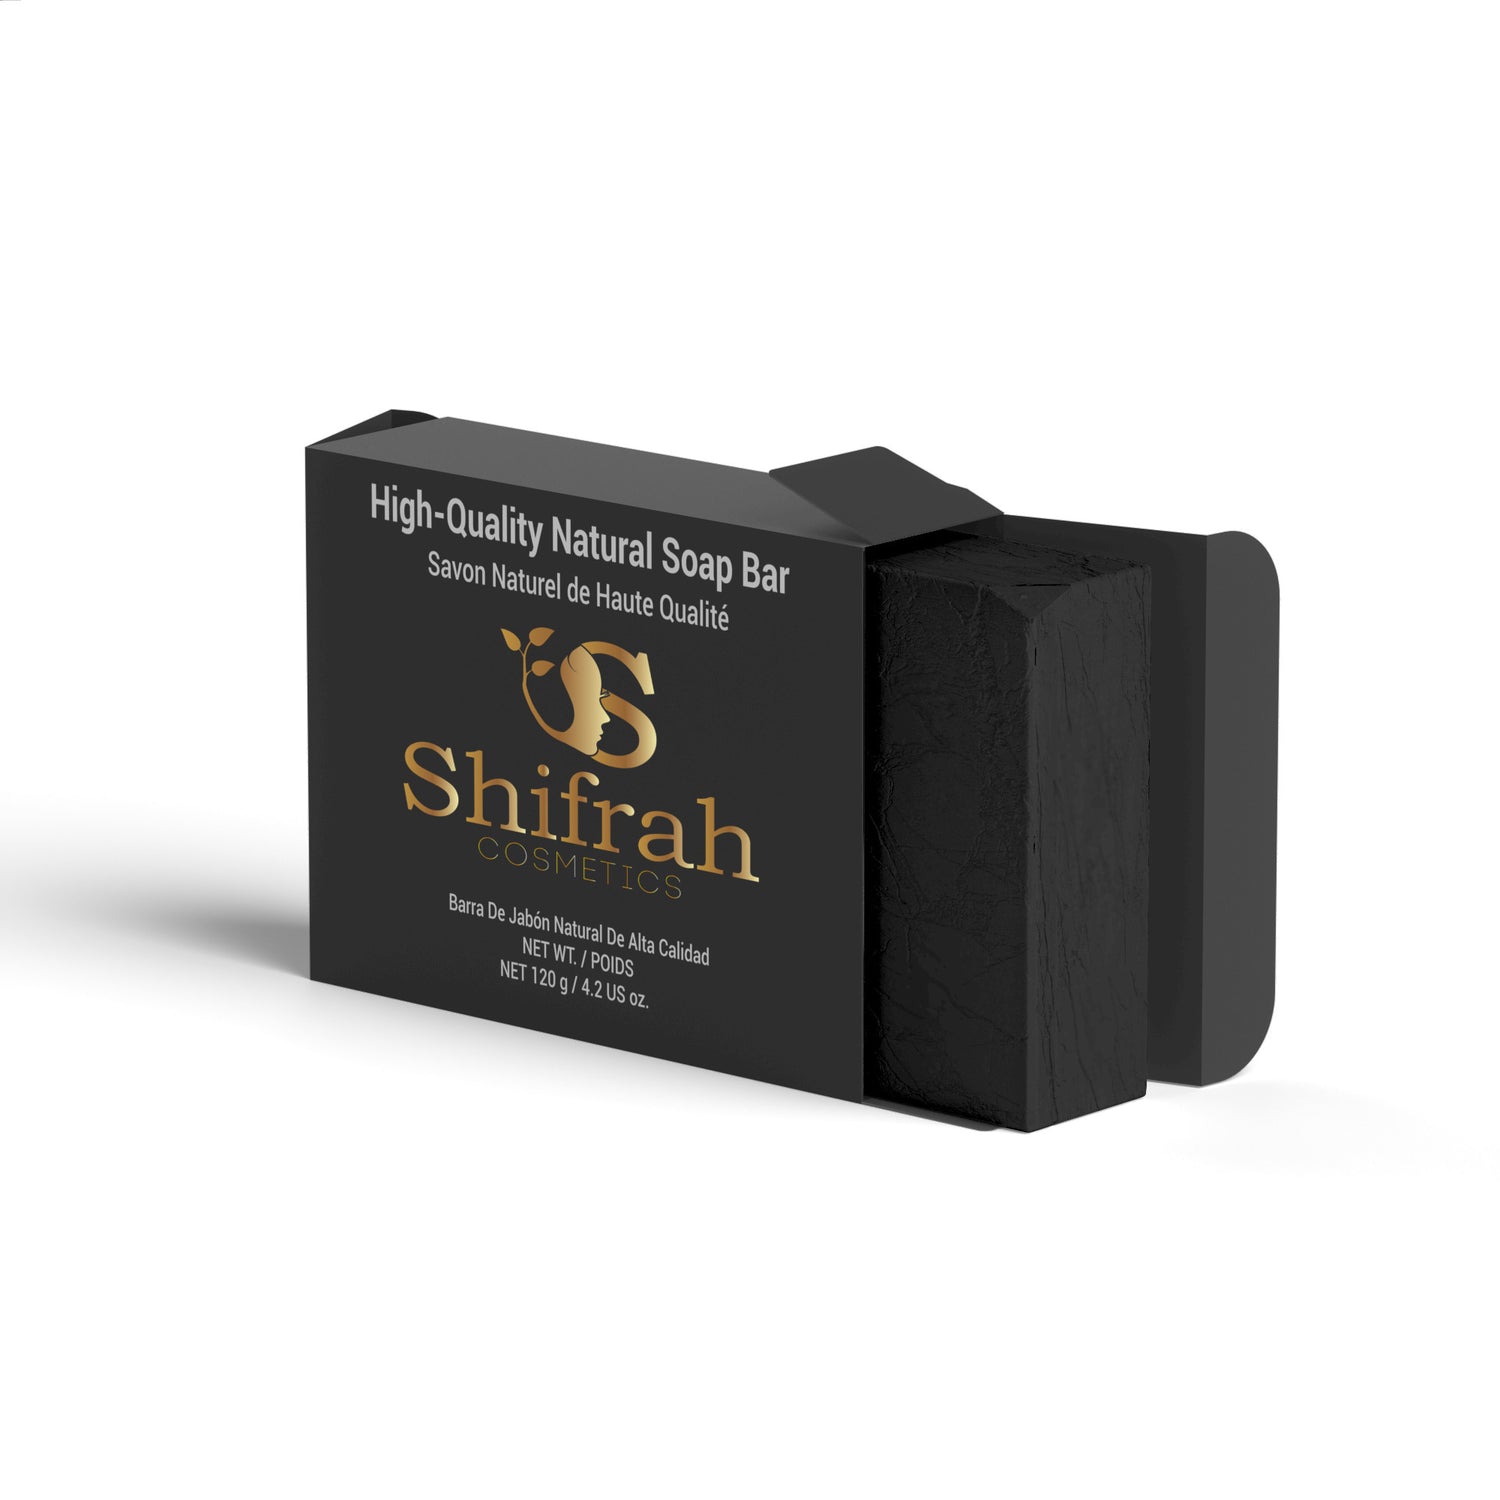 shifrah-cosmetics beauty product